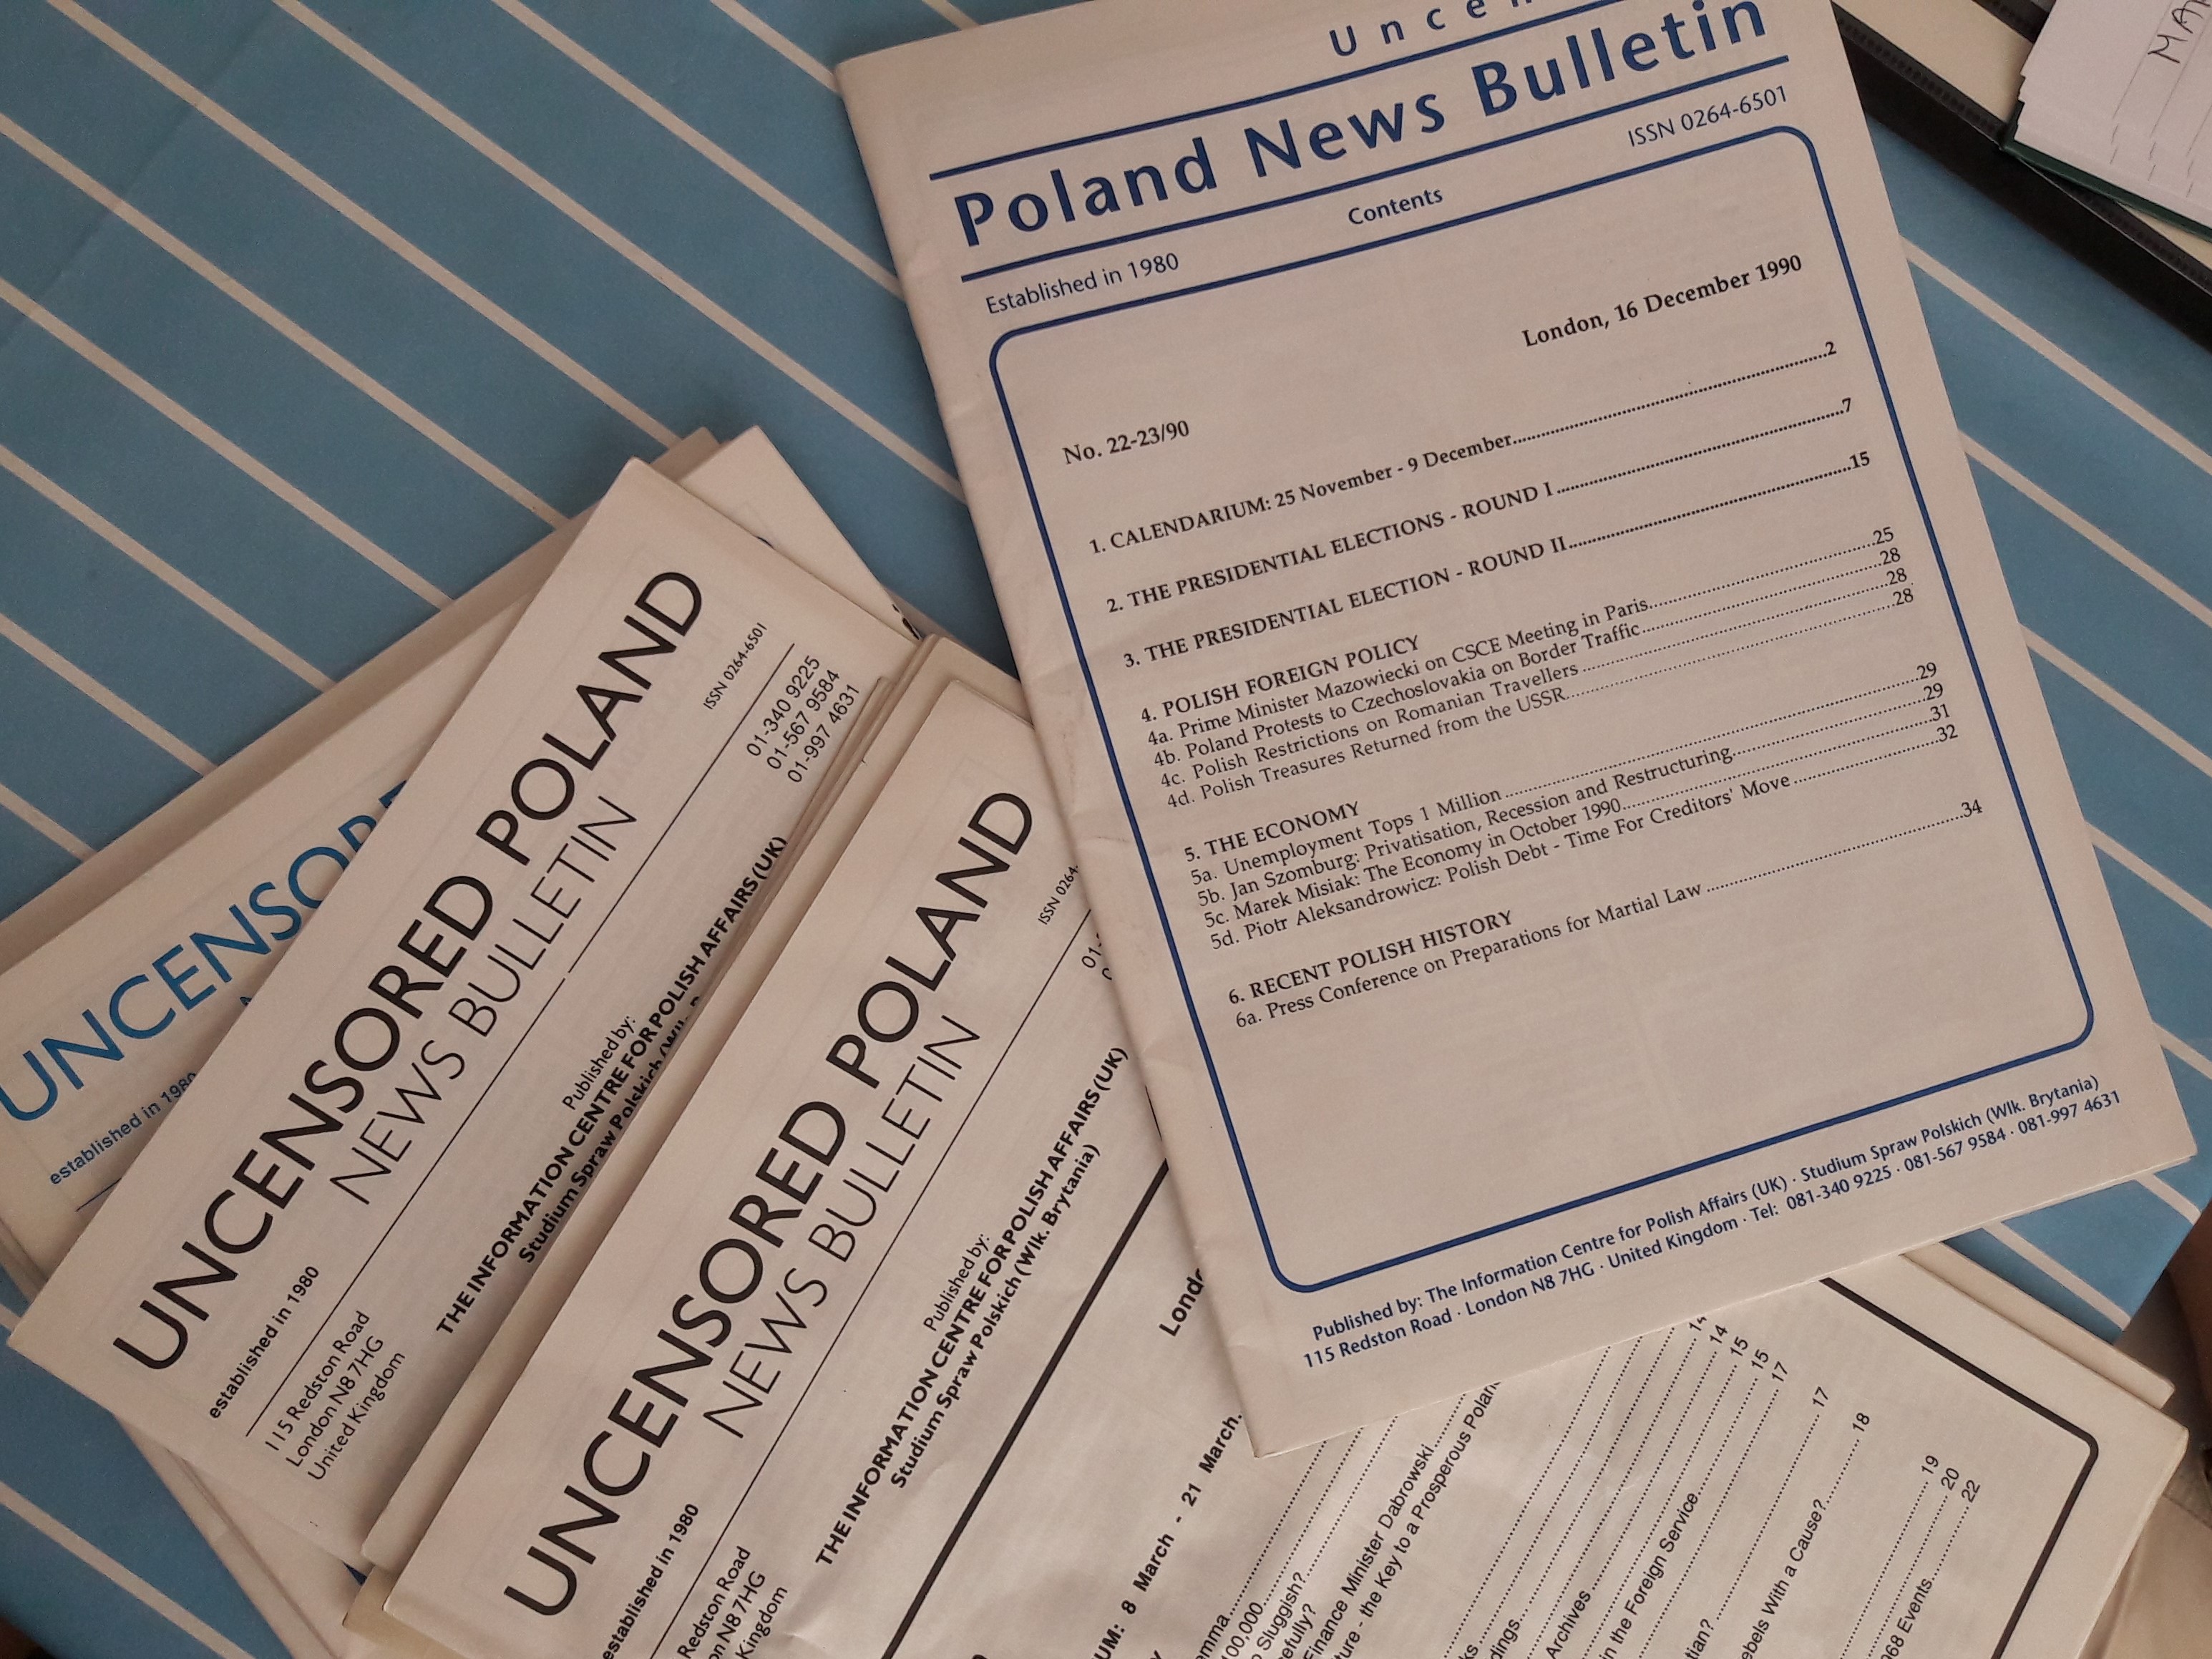 Poland News Bulletin 